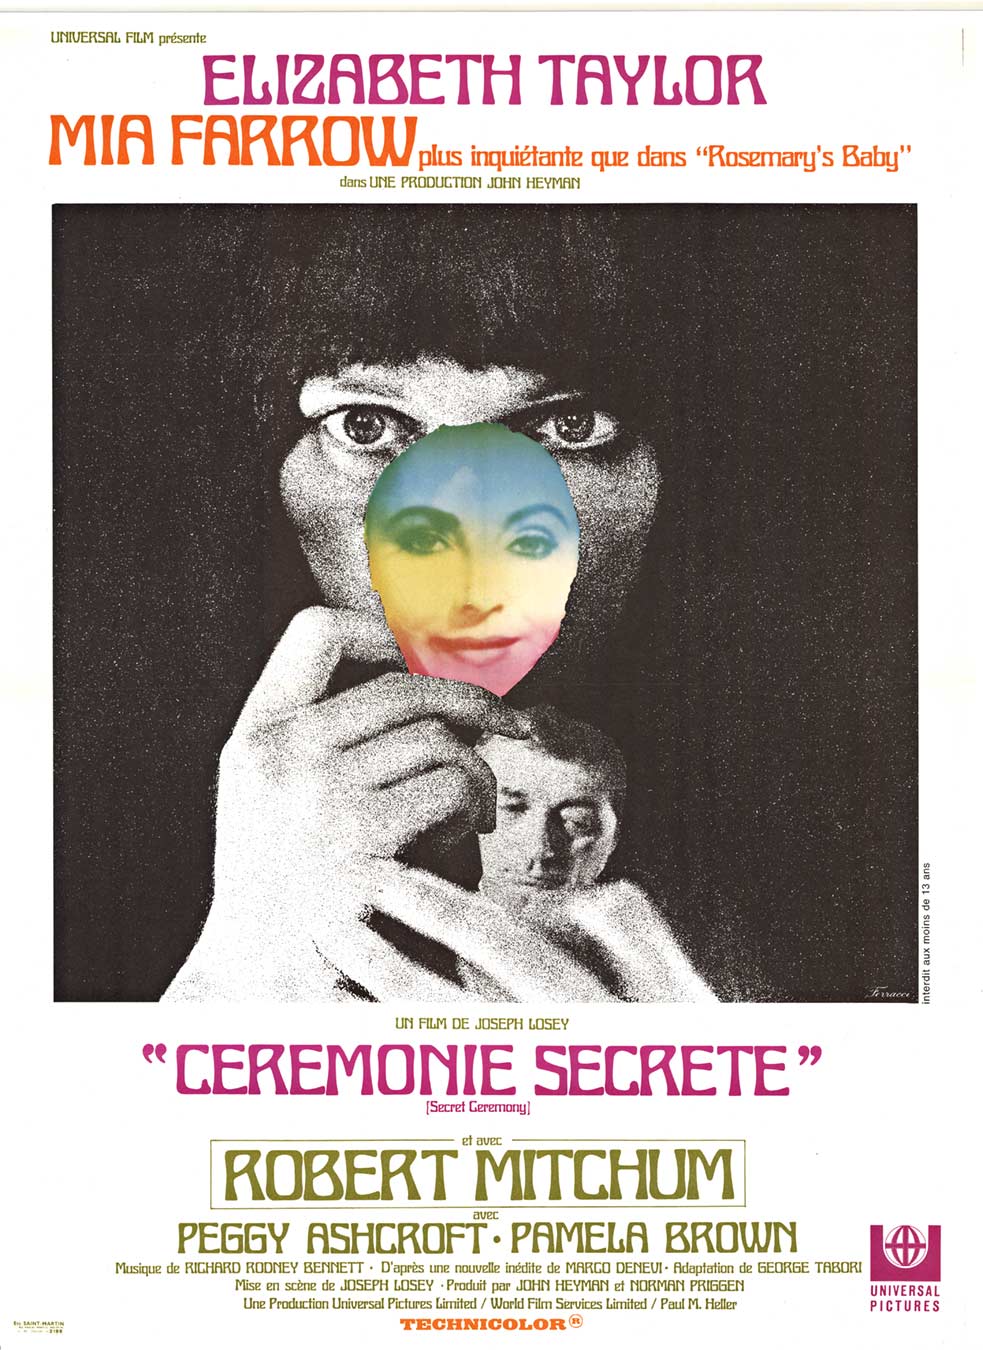 Ceremony Secret movie poster, Starring Robert Mitchum